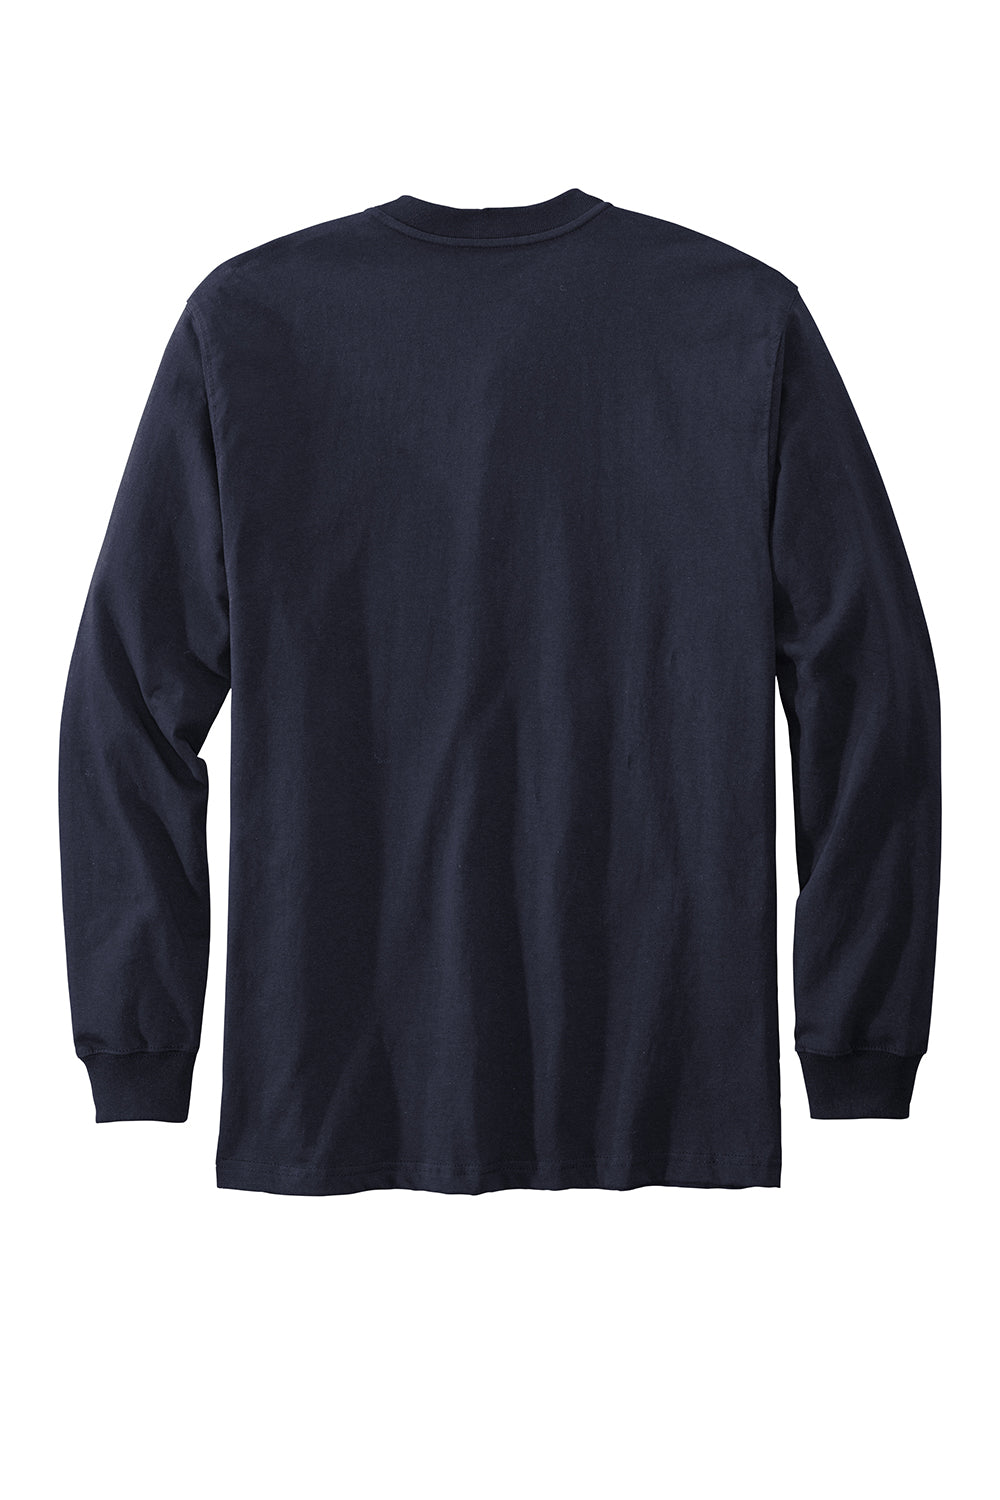 Carhartt CTK128 Mens Long Sleeve Henley T-Shirt w/ Pocket Navy Blue Flat Back